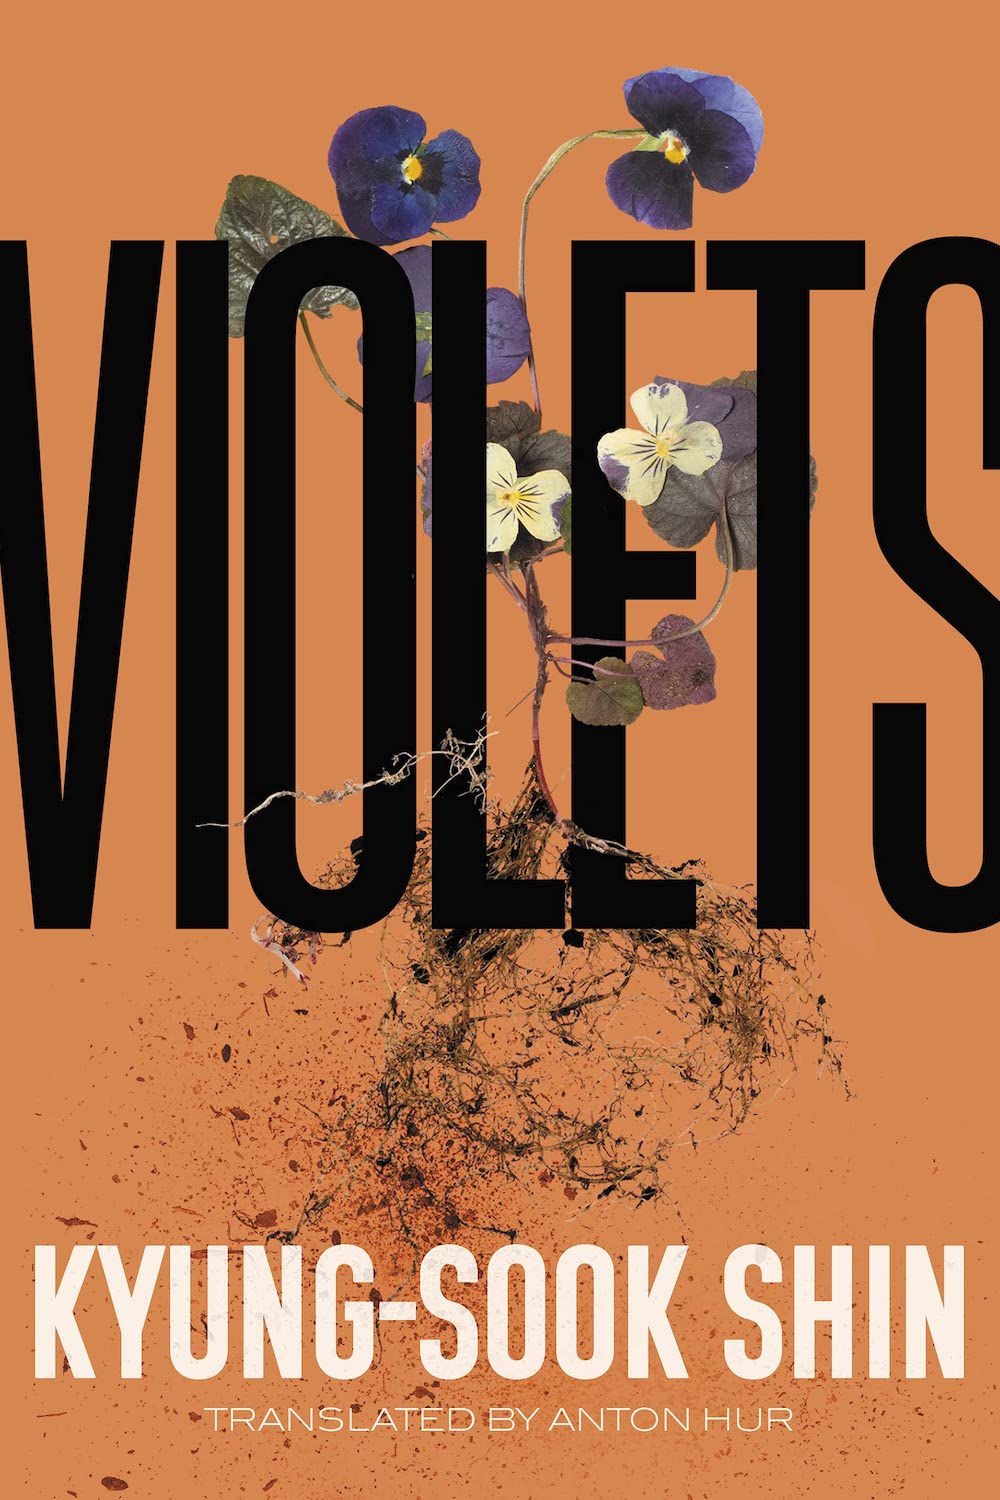 cover of kyung-sook shin novel violets title in black letters against orange background with violets